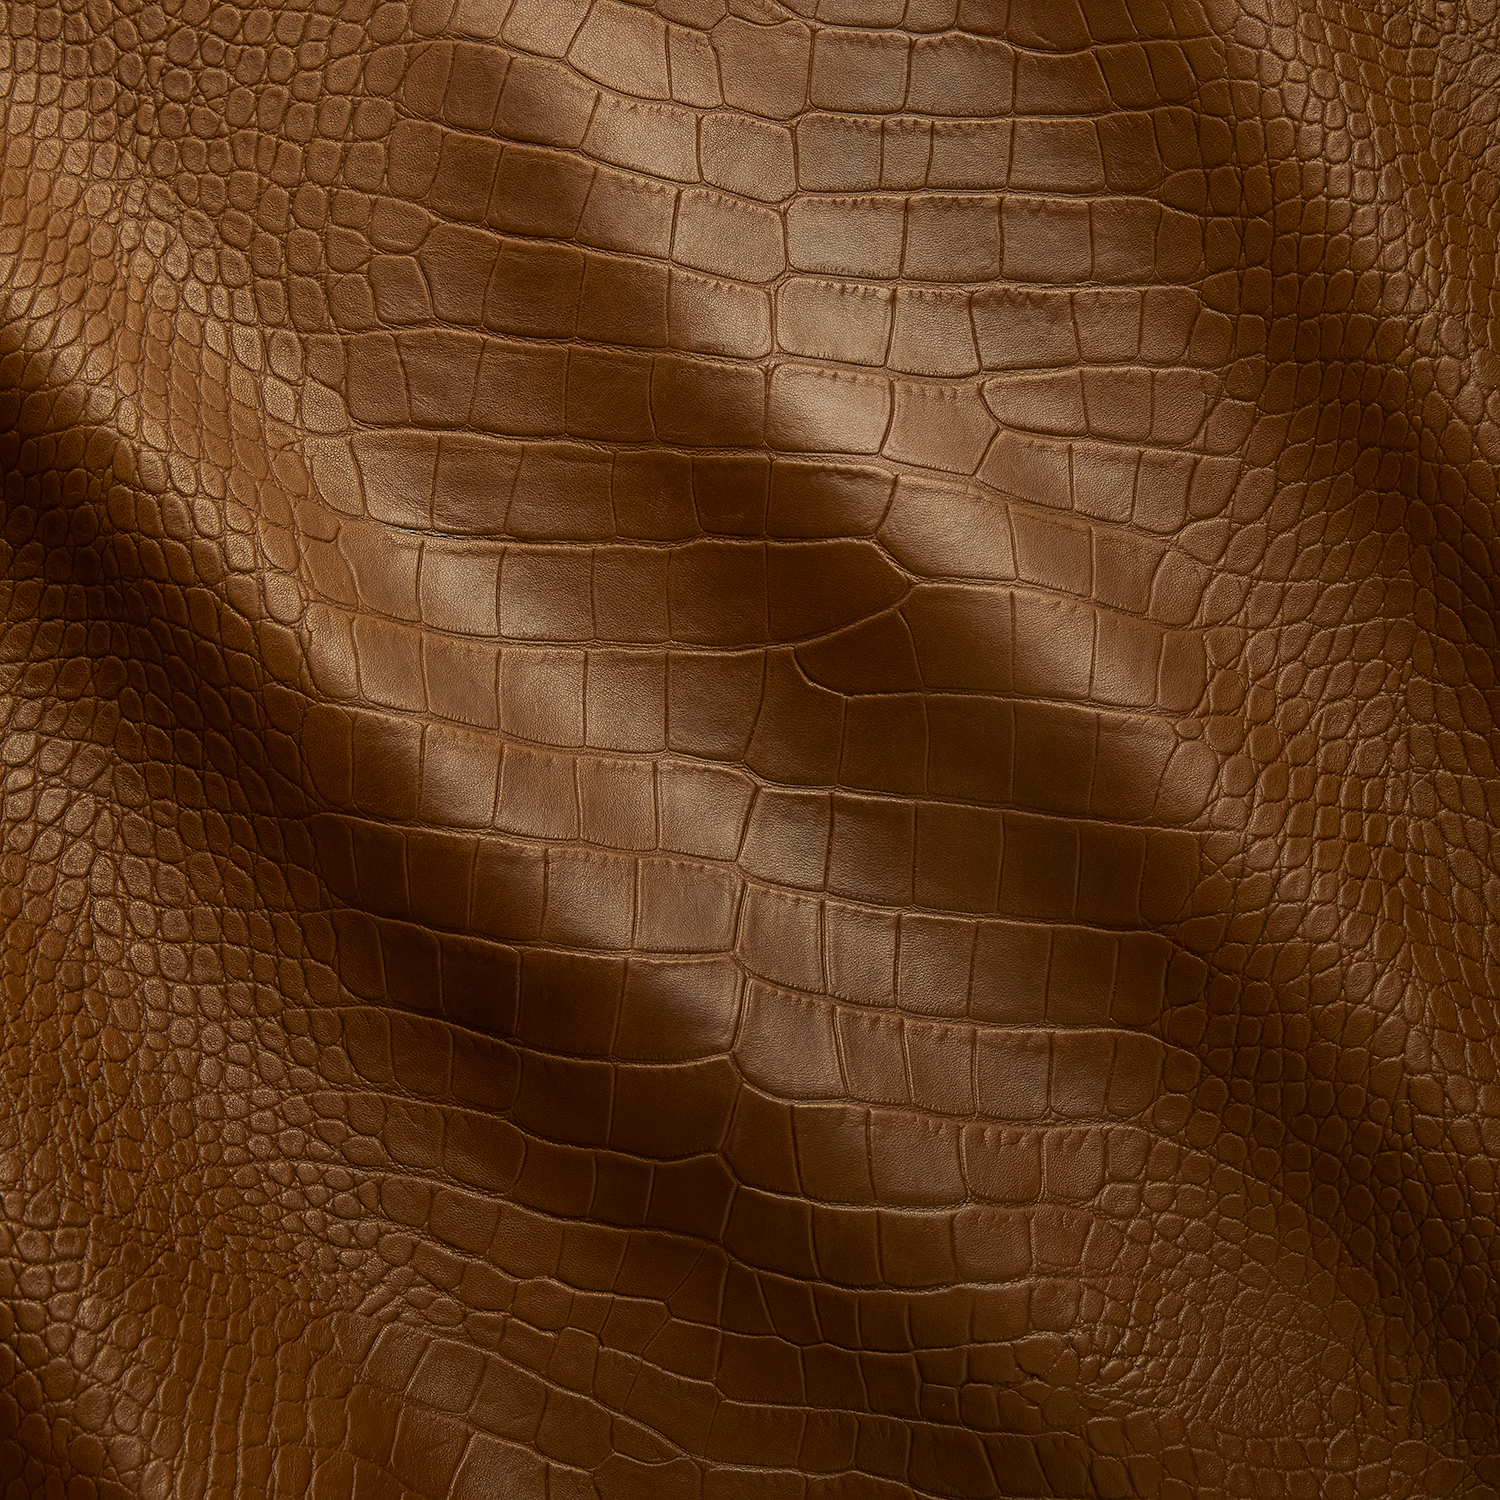 West African Handbag (Crocodile skin)